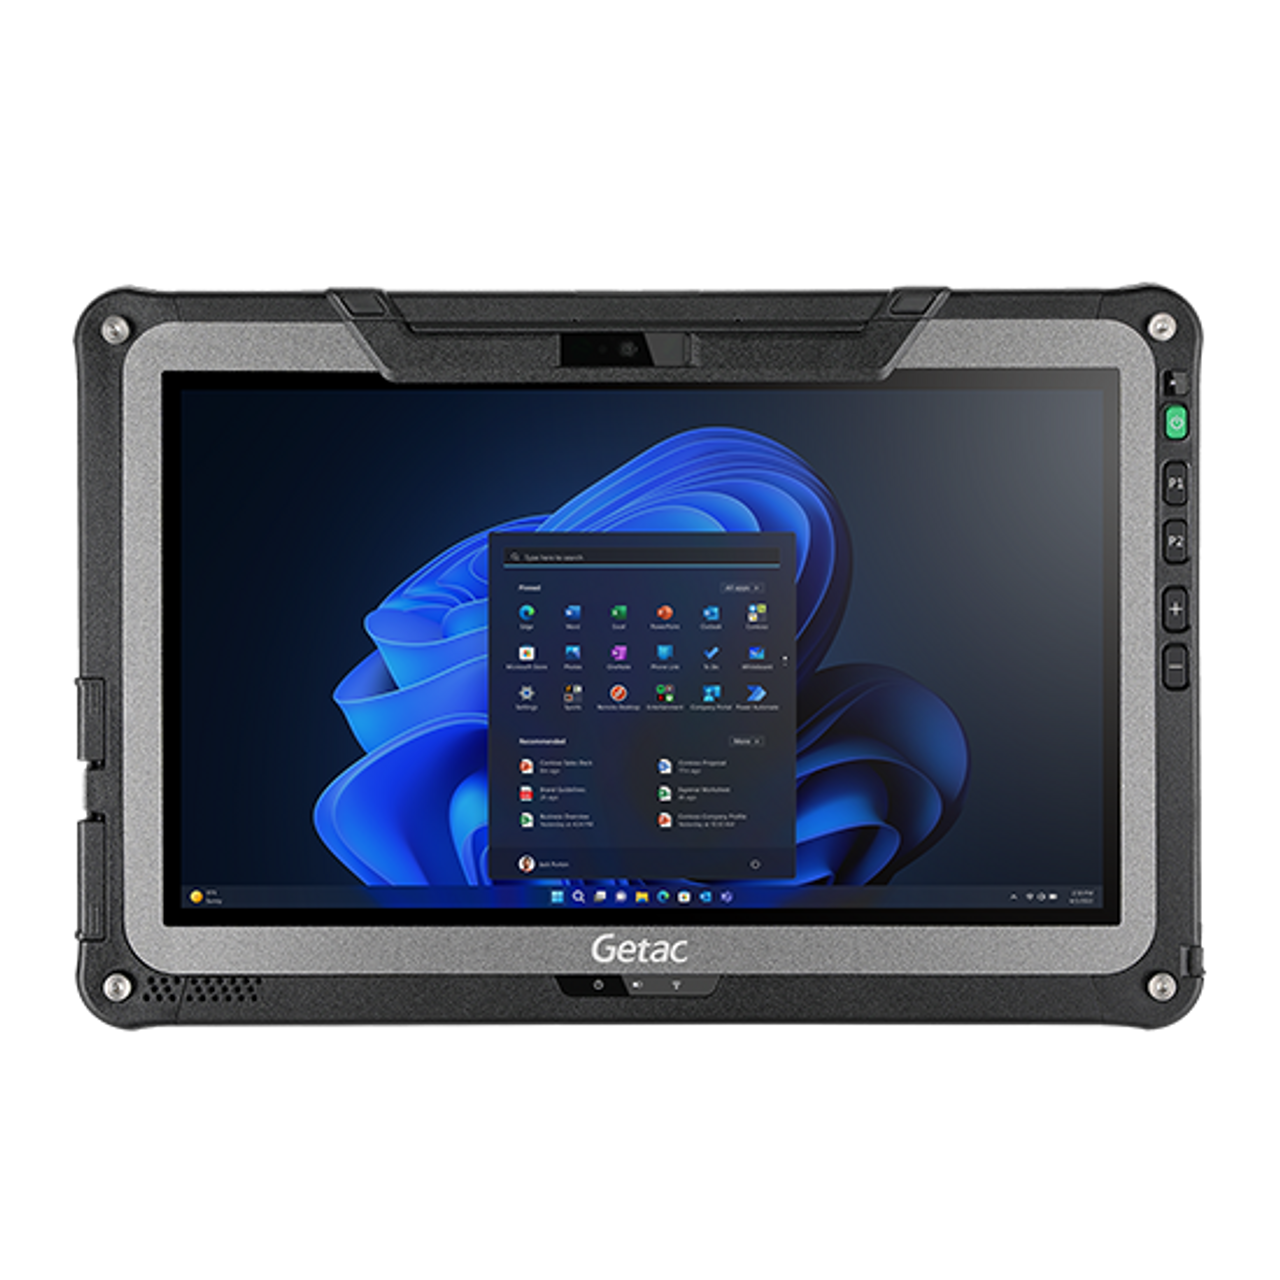 Getac F110 G6 - i5-1135G7, Windows Hello Webcam, Win10+8GB RAM, 256GB PCIe SSD, Sunlight Readable FHD+Touchscreen+Stylus, Camera, WiFi+BT+4G LTE (EM7511) w/integrated GPS+Passthrough, SCrdr 3yb2b